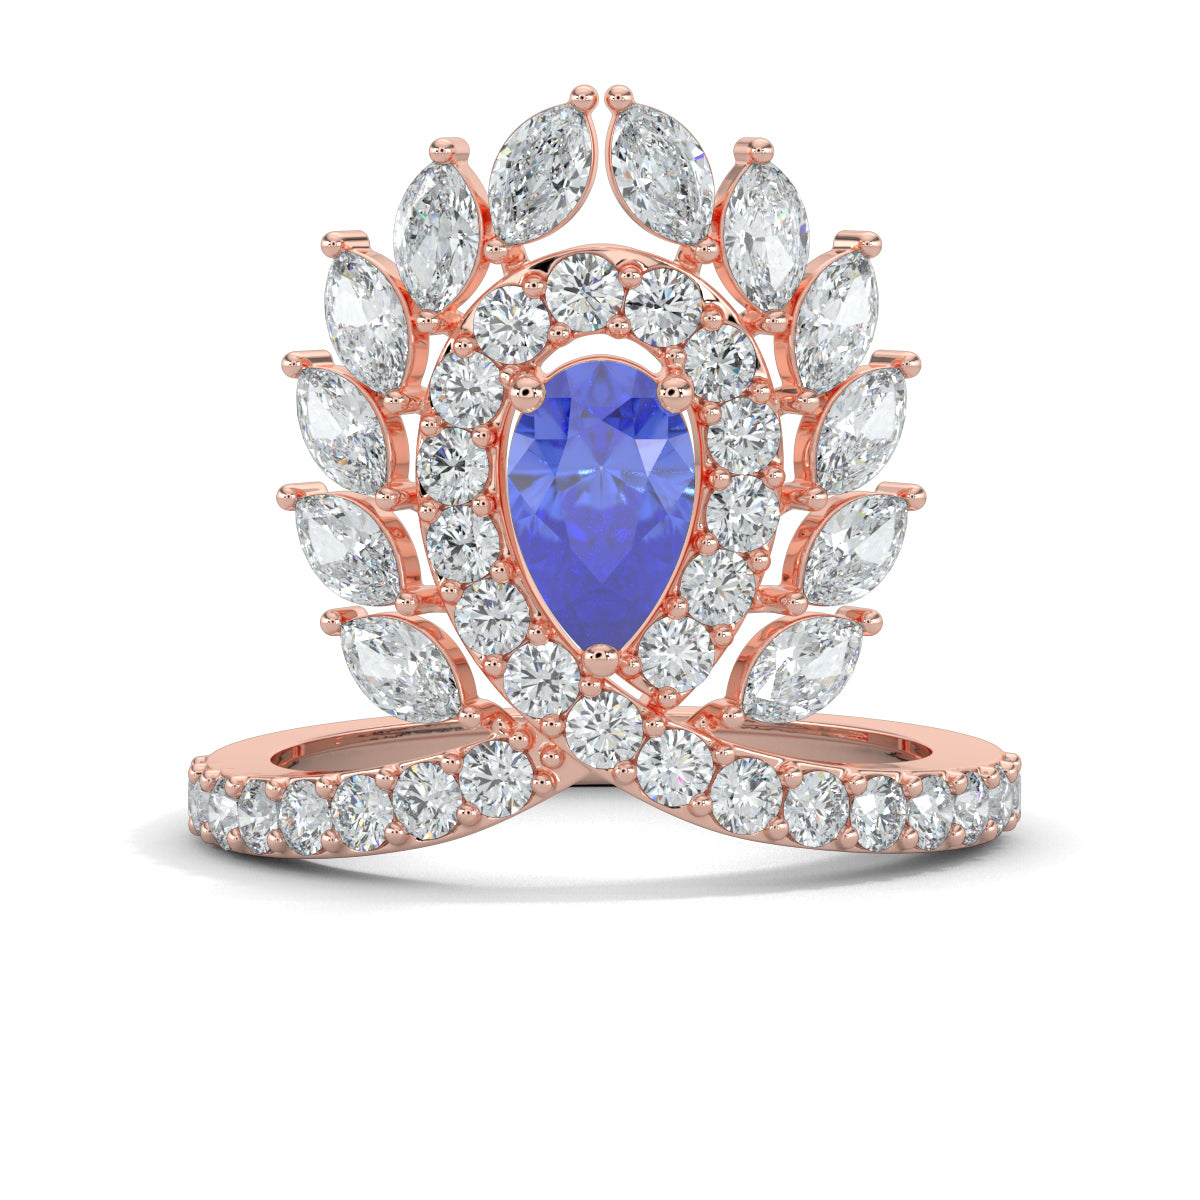 Rose Gold, Diamond Ring, Natural diamond ring, Majestic plume diamond ring, cocktail ring, lab-grown diamonds, blue sapphire diamond, pear-shaped diamonds, round diamonds, marquise diamonds, luxurious ring, statement jewelry